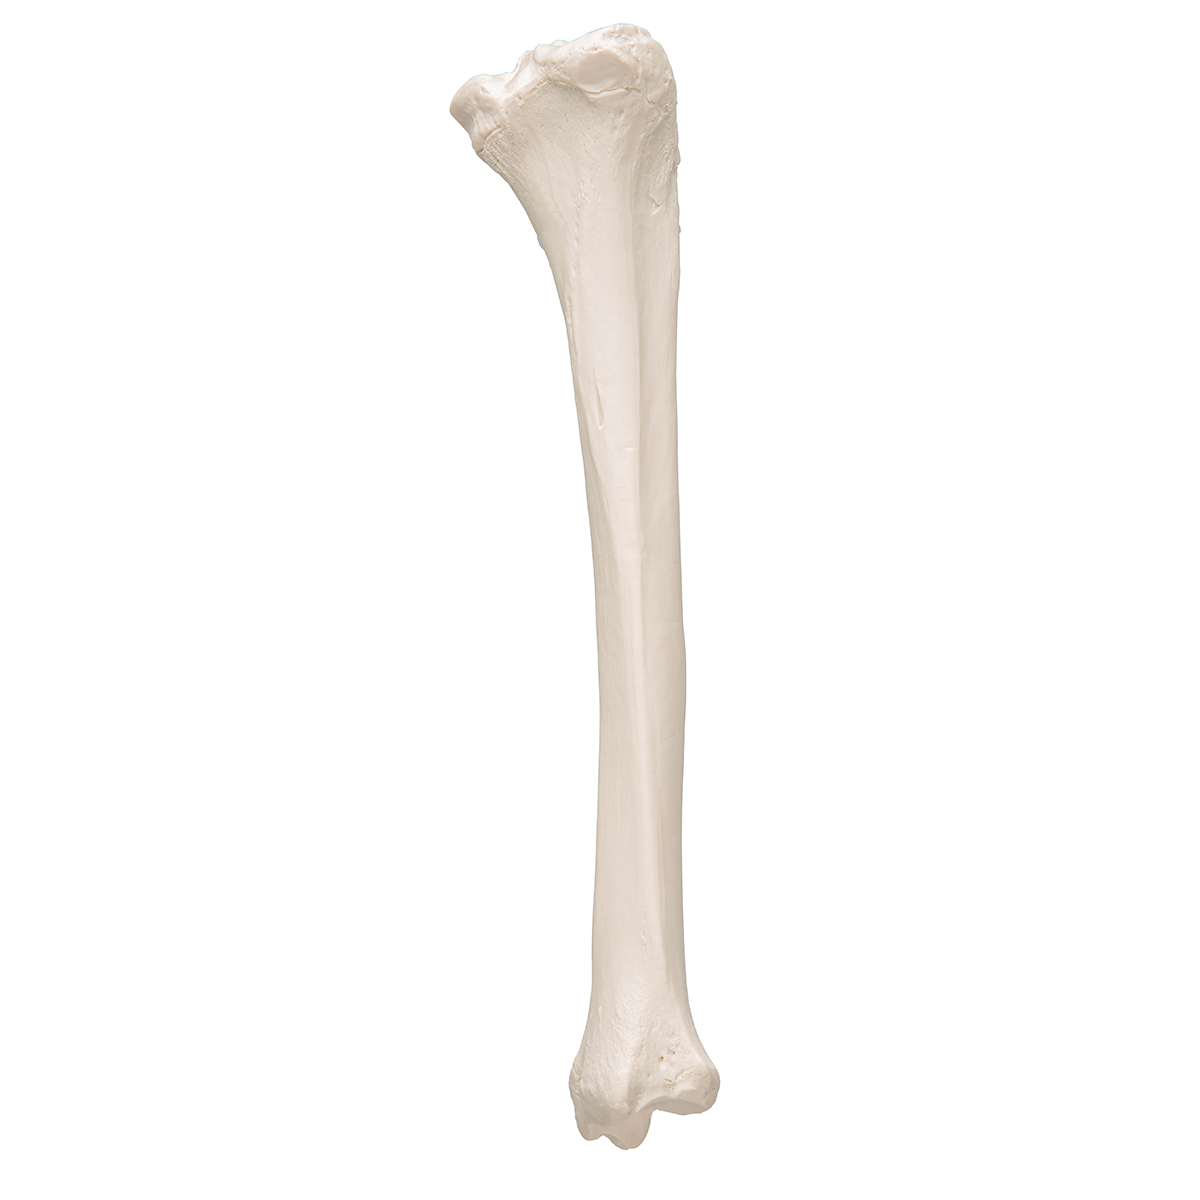 FlexBone Training Model - Tibia Bone